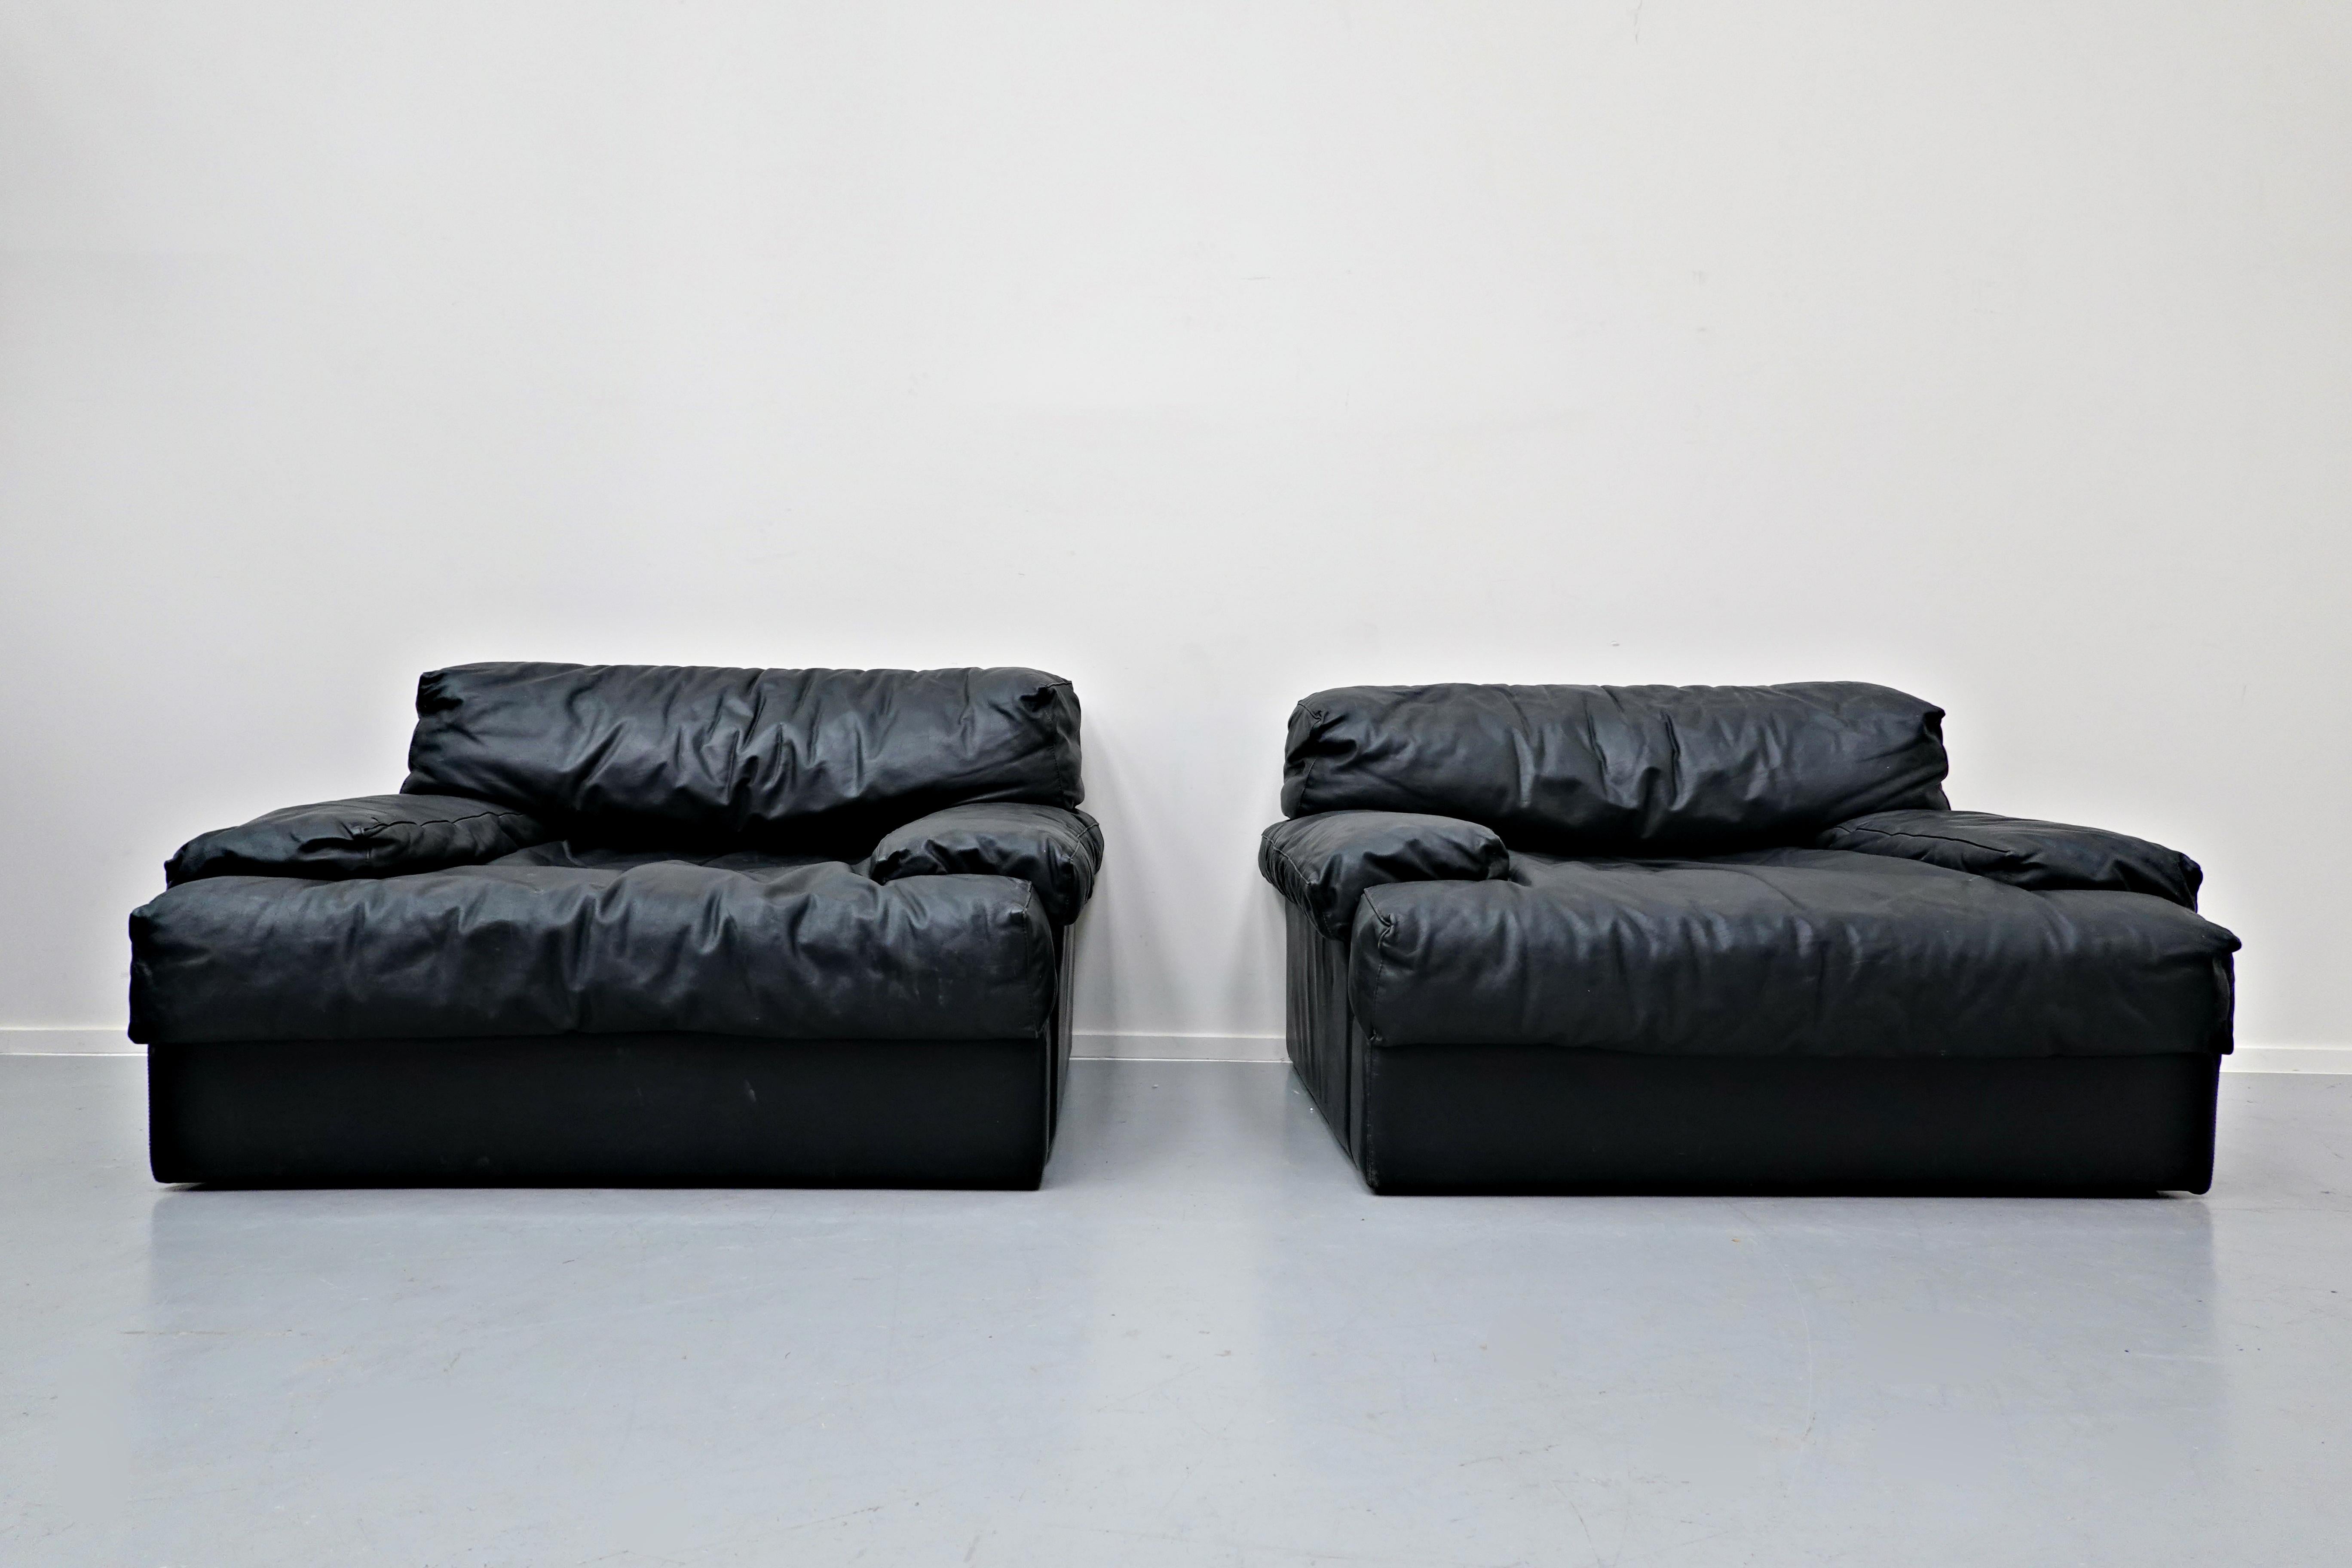 Late 20th Century Pair of Italian Mid-Century Modern Armchairs, Black Leather, 1960s